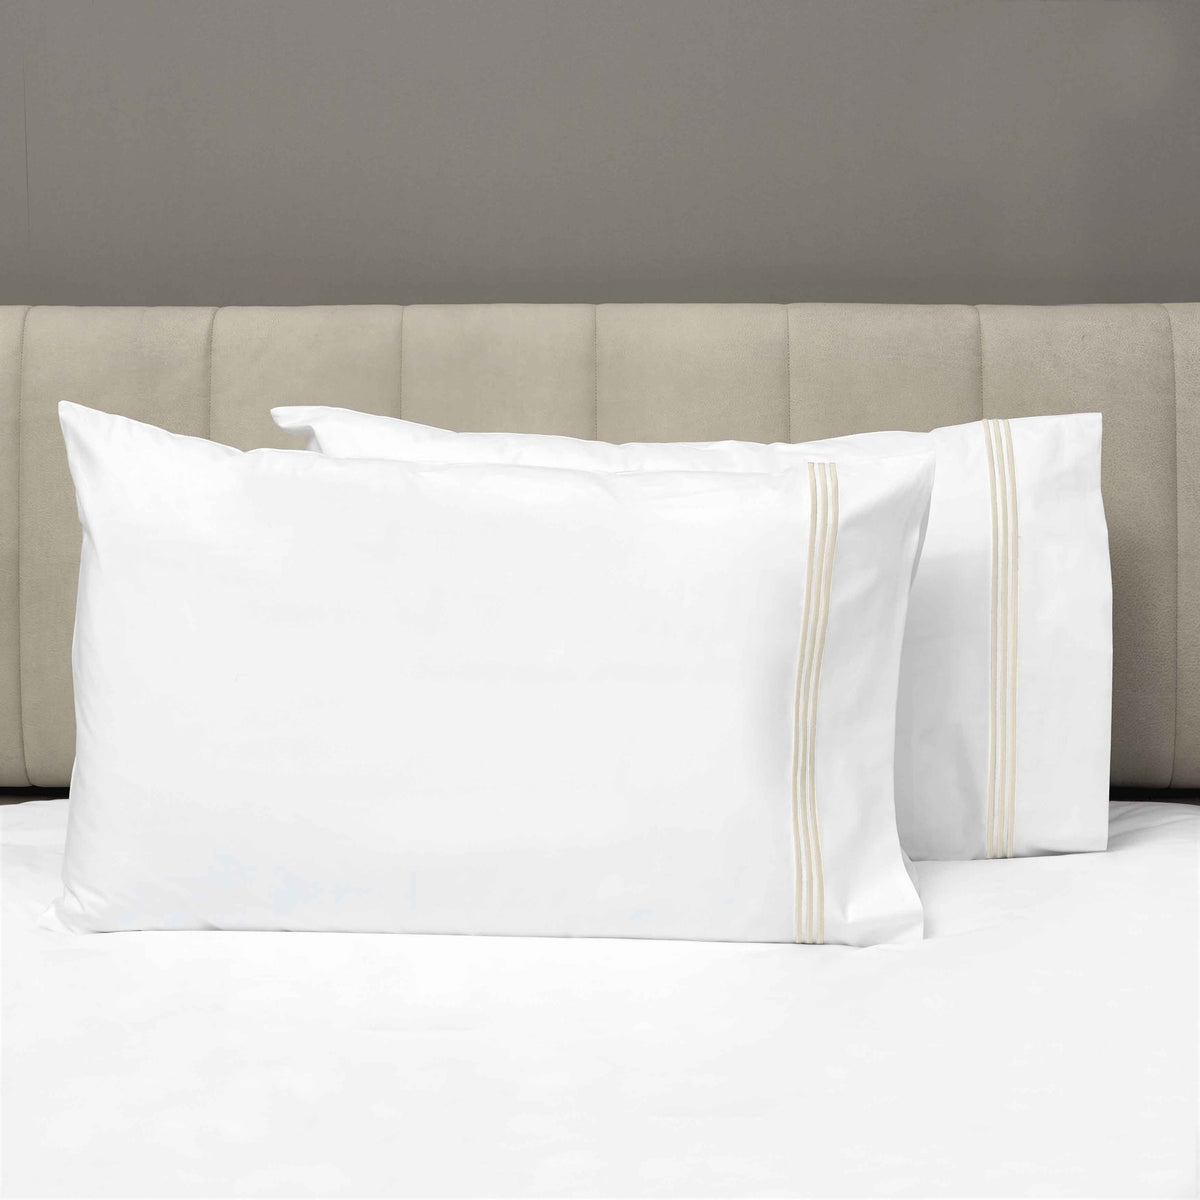 Pair of Pillowcases of Signoria Platinum Percale Bedding in White/Ivory Color